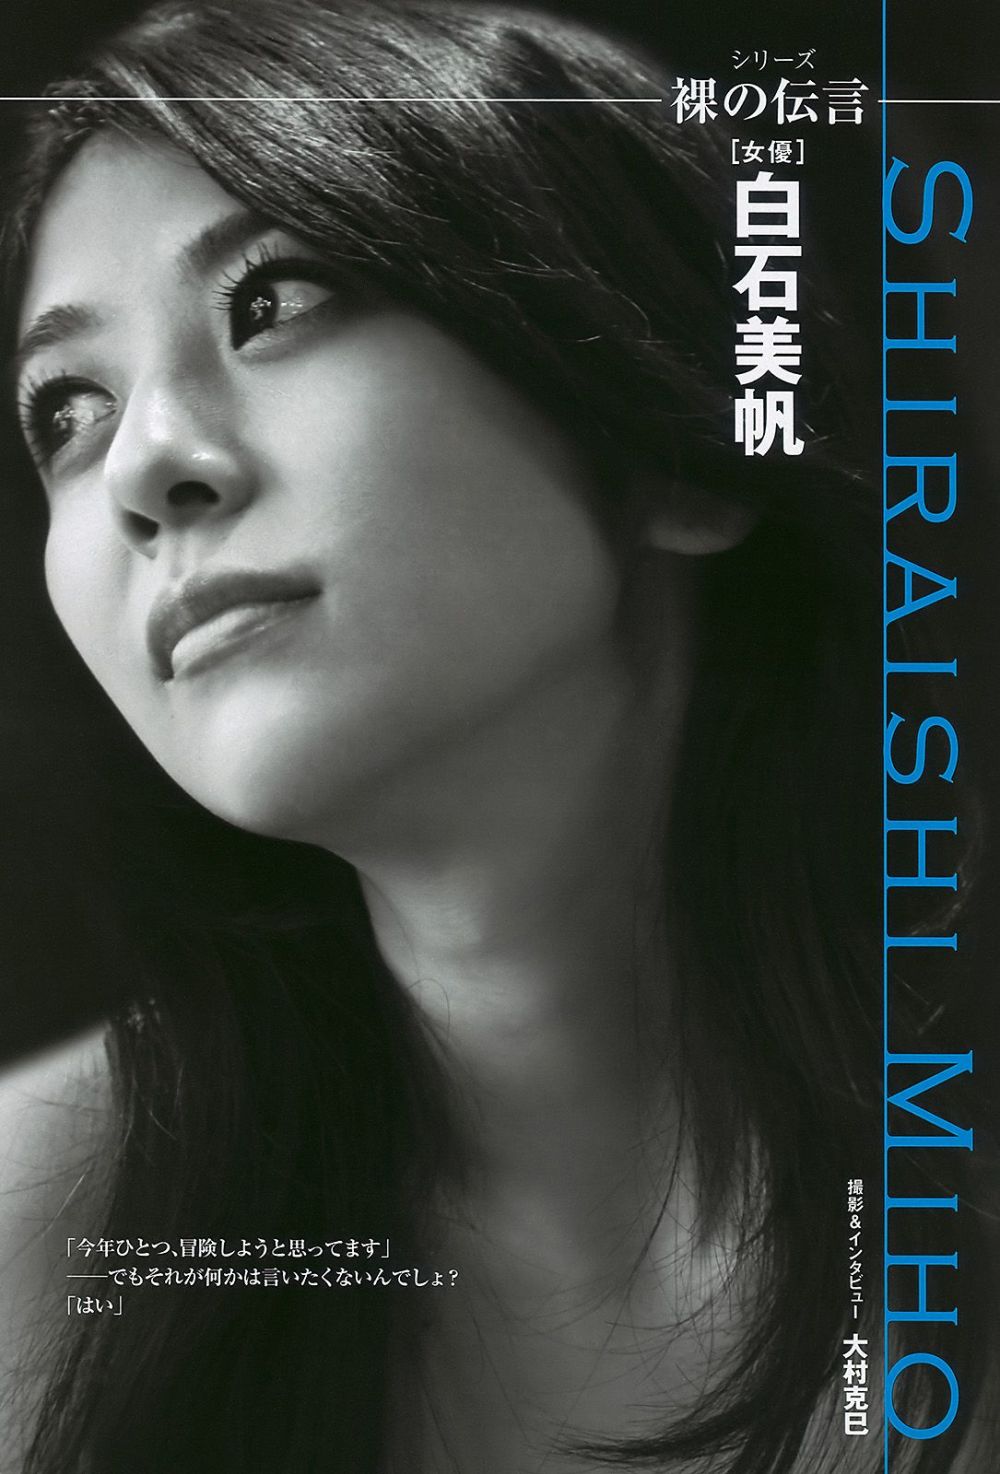 Miho Shiraishi Sexy and Hottest Photos , Latest Pics